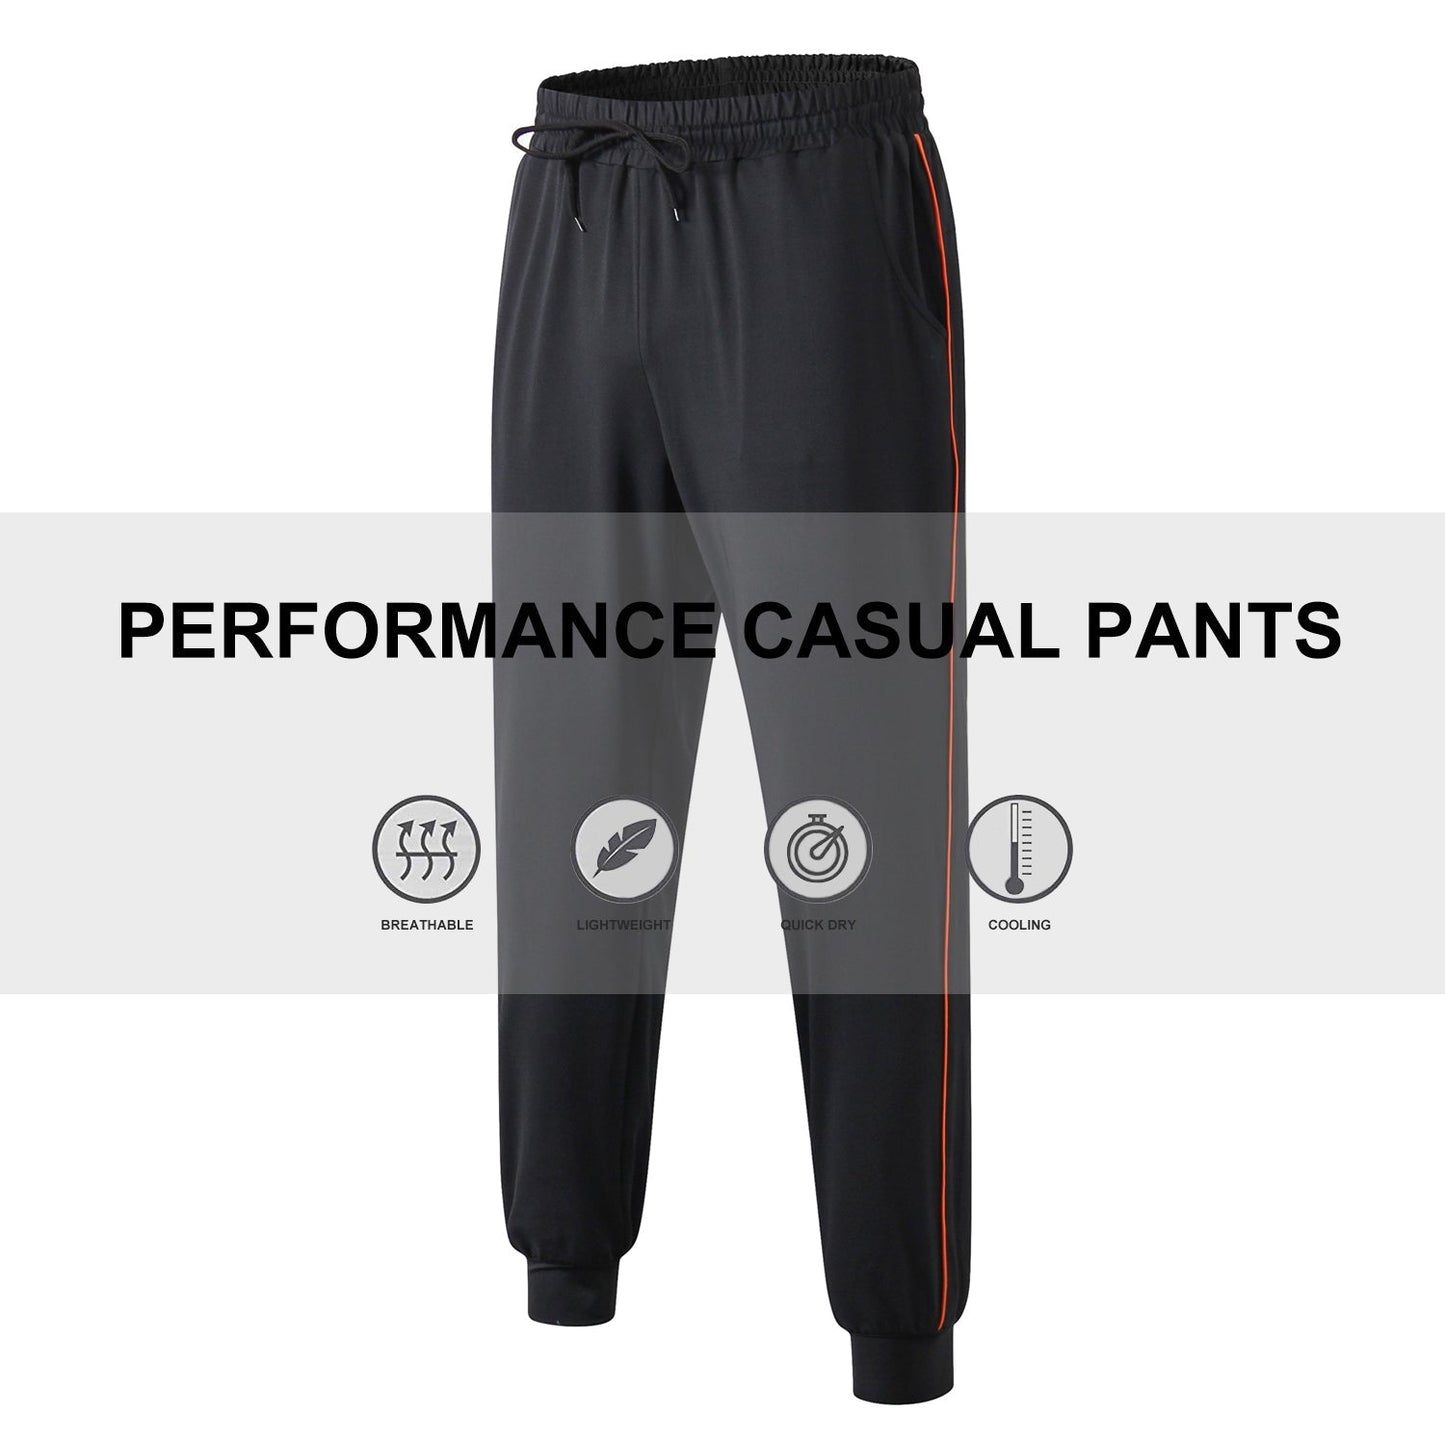 Mens Casual Sweatpants with Pockets Elastic Waist Drawstring Pants for Athletic Jogging Running LANBAOSI